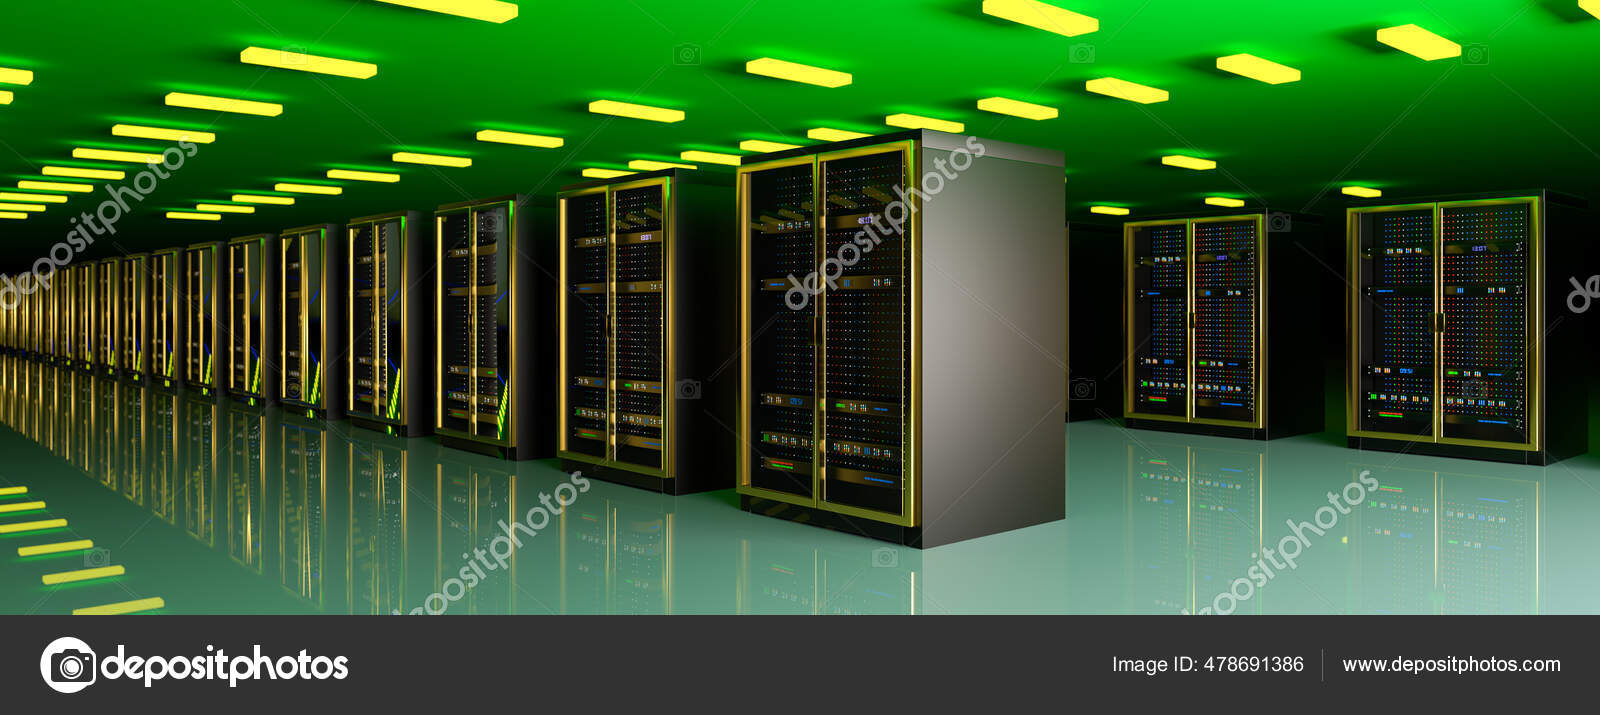 Backups hosting. ЦОД на фермах. Server Room. ЦОД Скиф. 66c2a273 сервер.